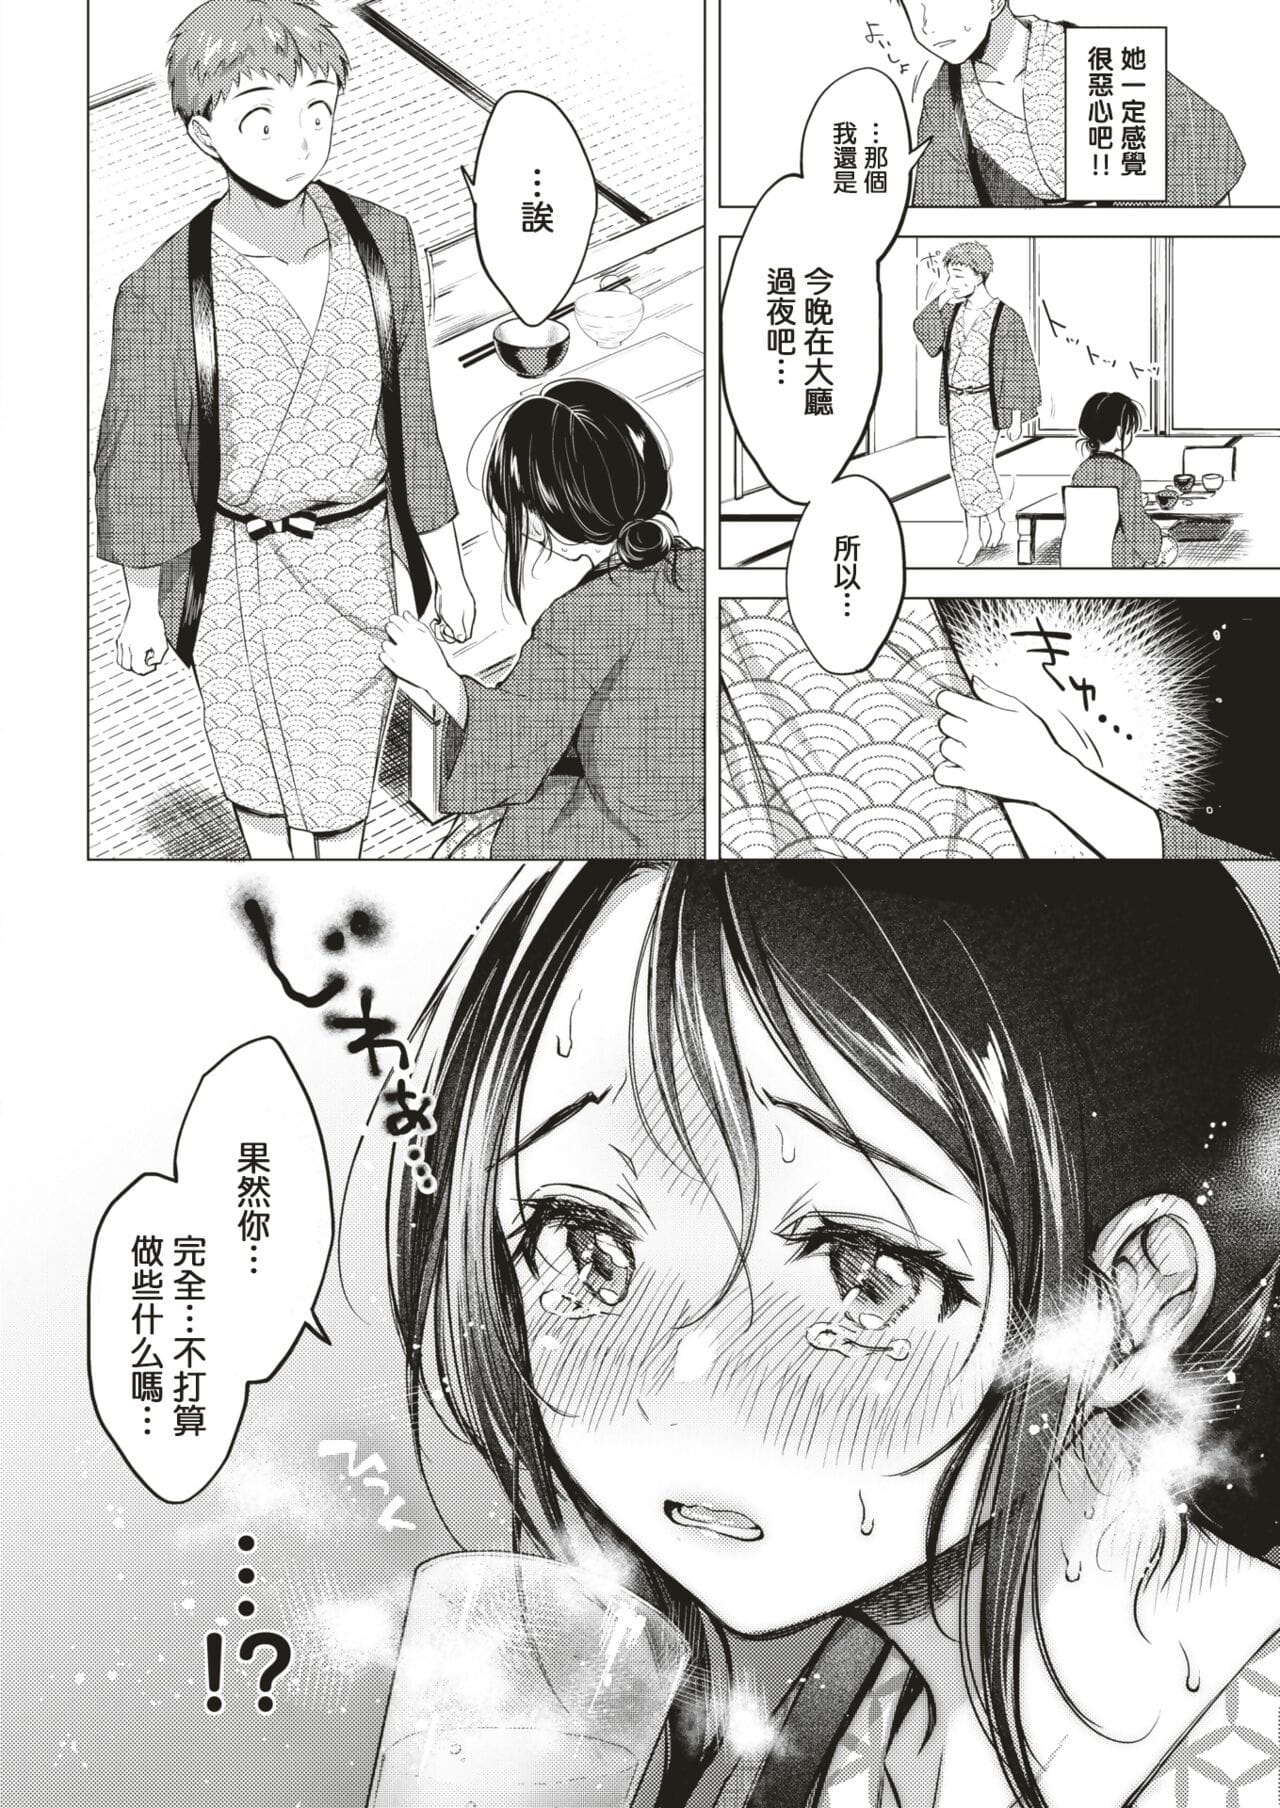 7 gatsu geen ougonhi page 1